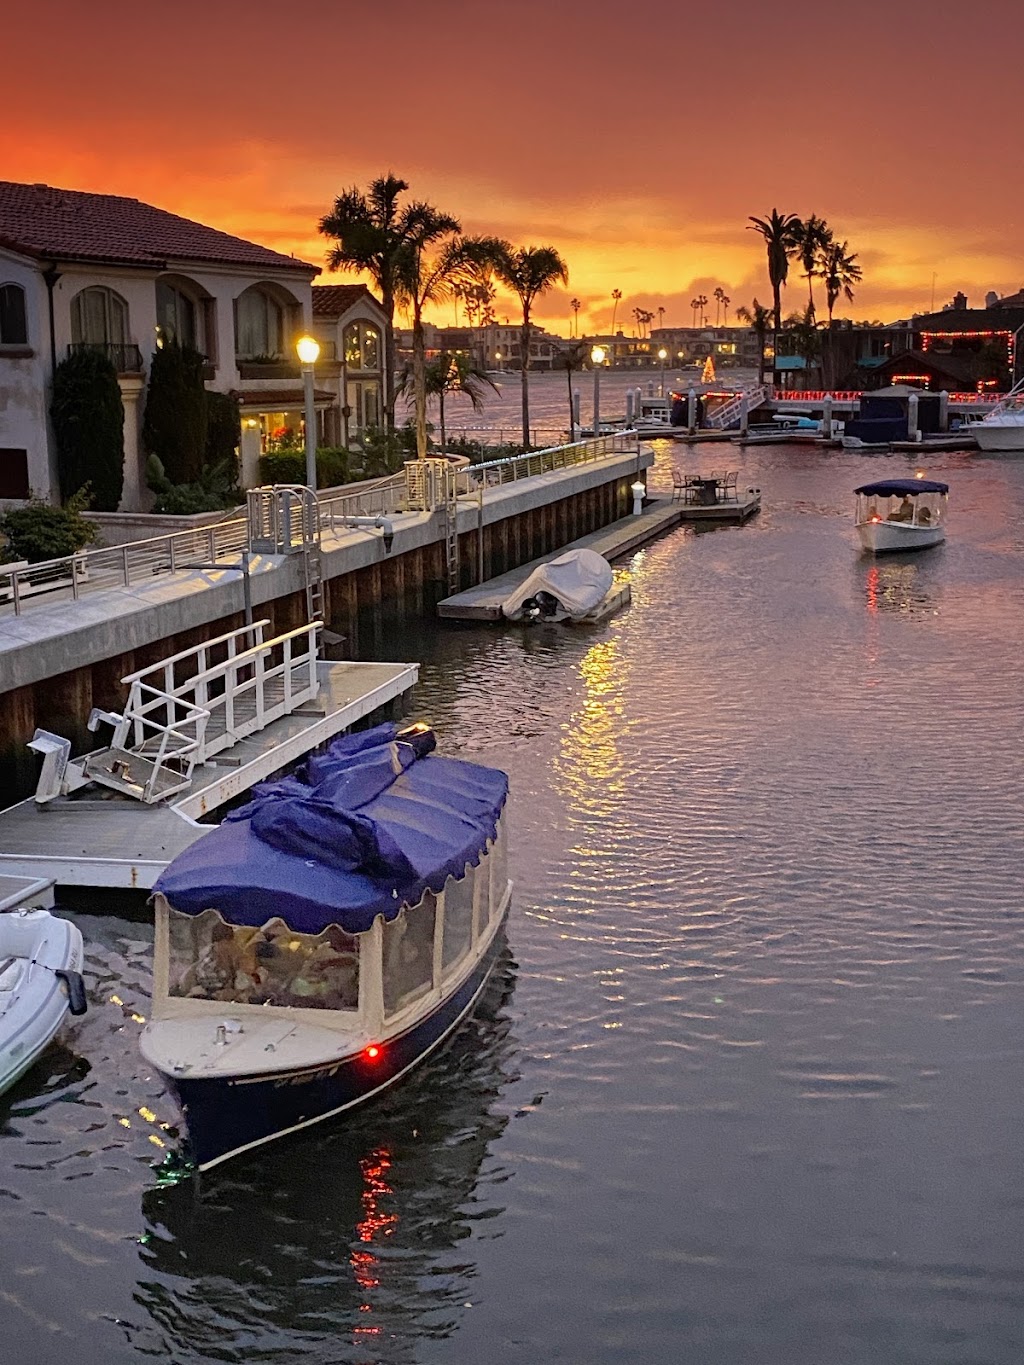 The Colonnade (Naples Island) - 10 The Colonnade Canal, Long Beach, CA ...